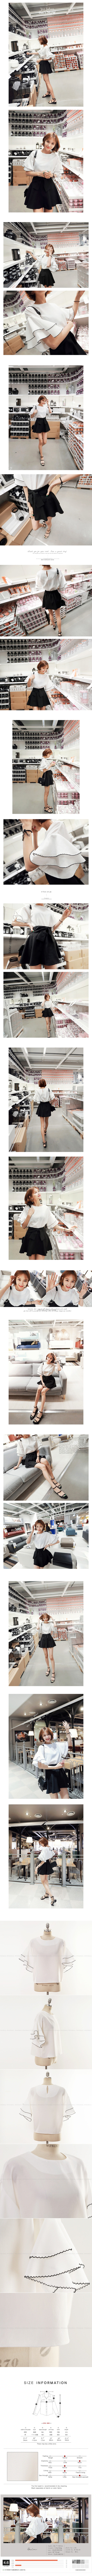 KOREA Wavy layered Ruffle Sleeve Blouse #White One Size(S-M) [Free Shipping]